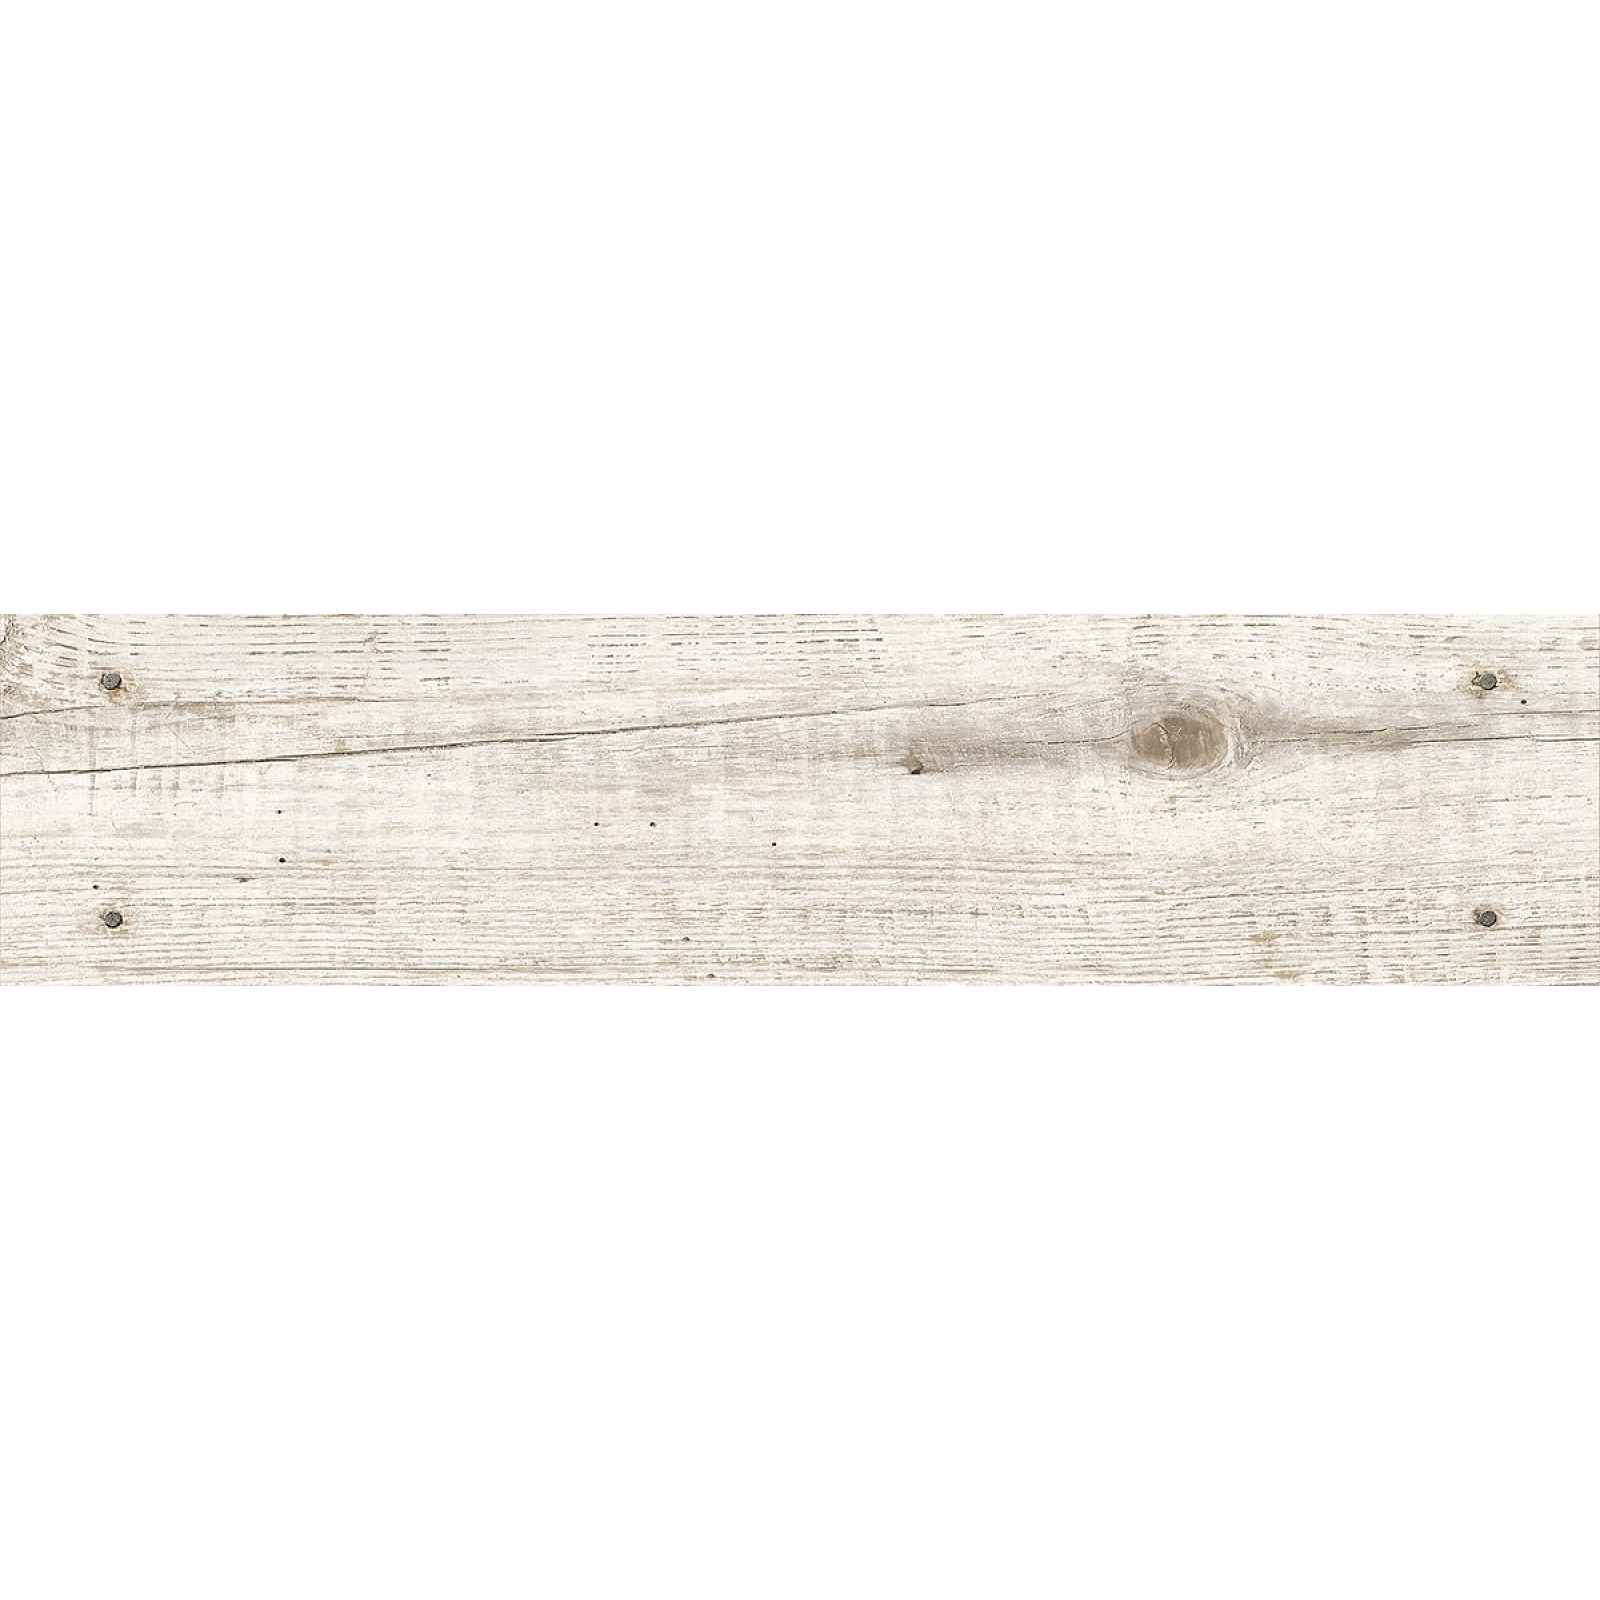 Dlažba Oset Nail Wood white 15x90 cm mat NWOOD159WH